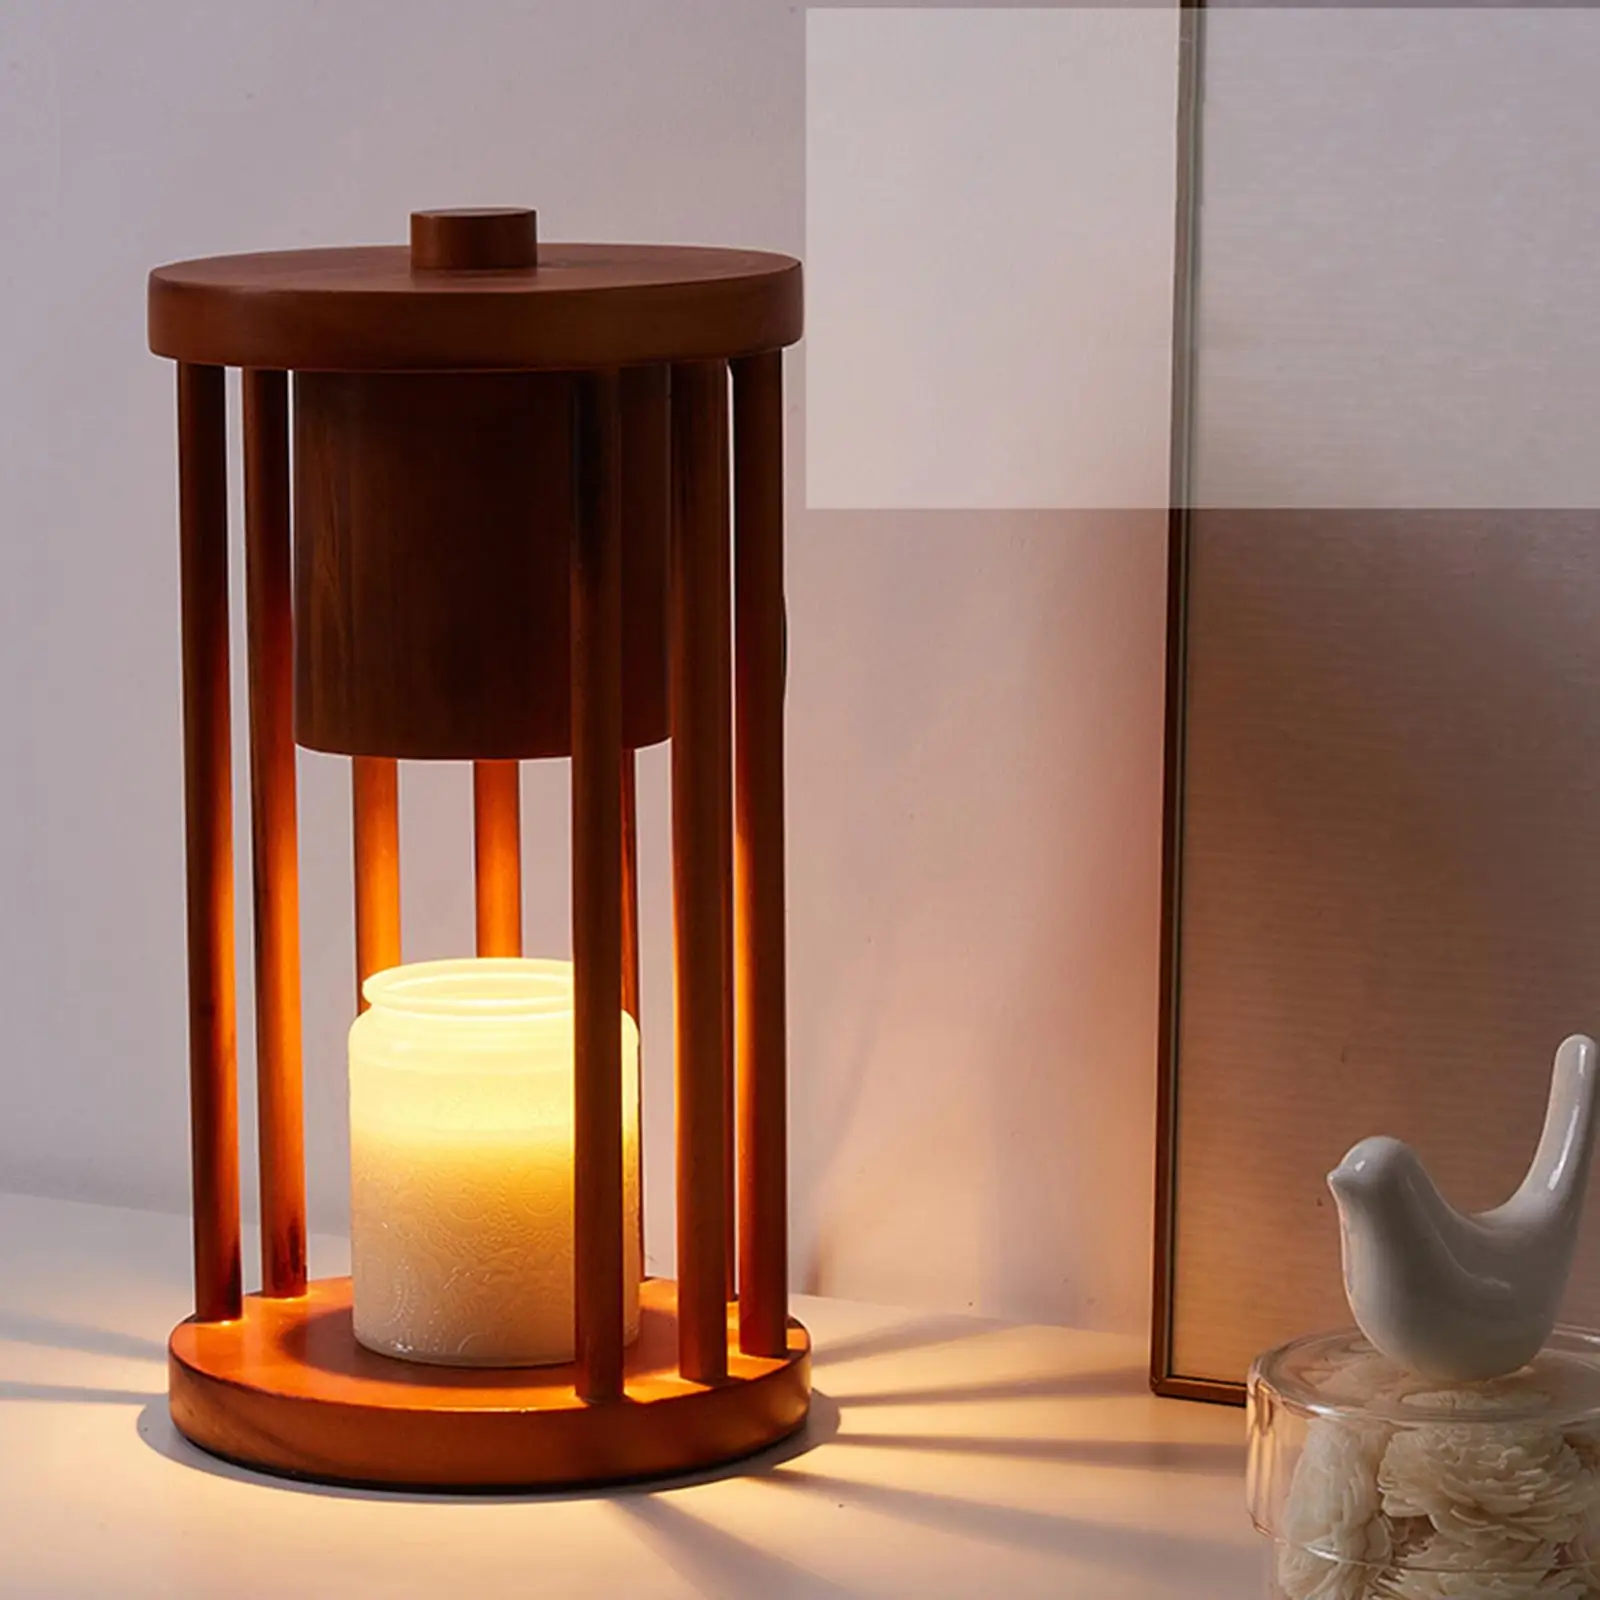 Candle Warmer Light Wooden Base ing Burner for Office Ornament